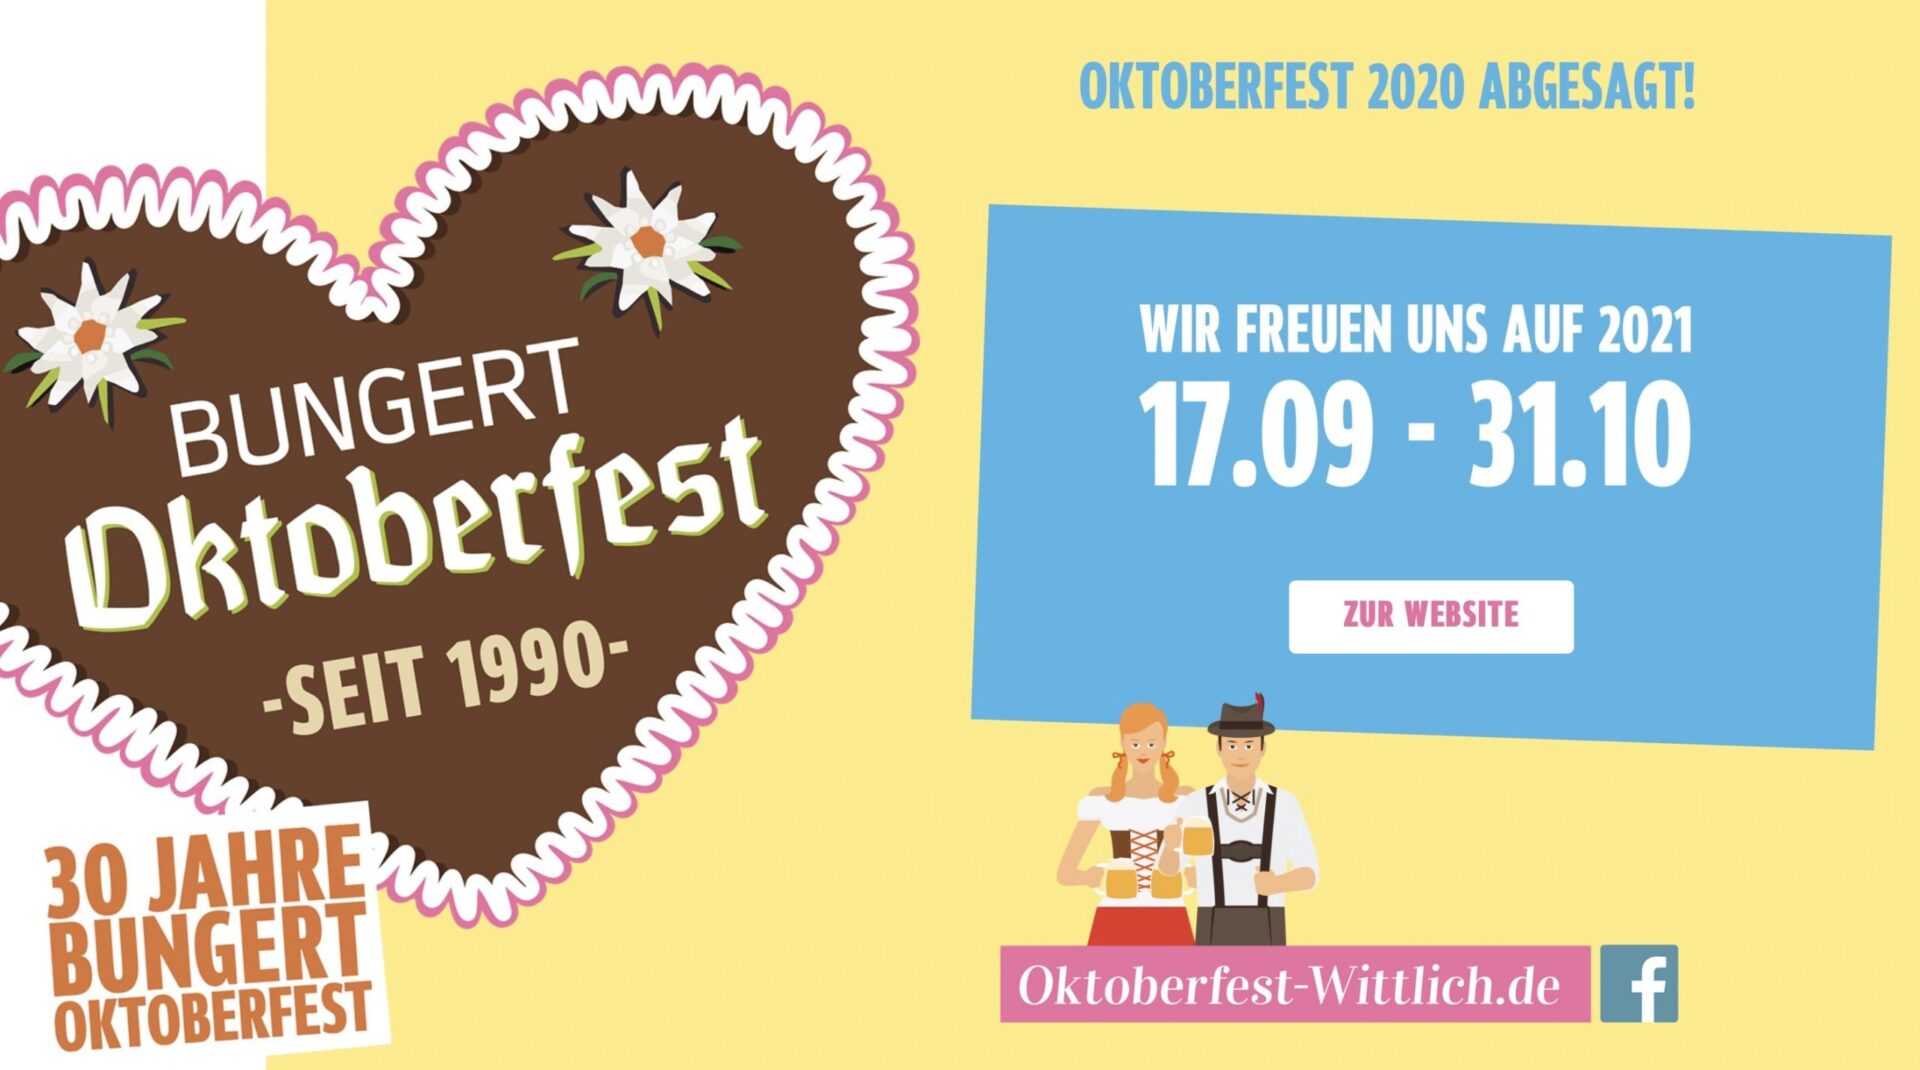 Bad 2021 oktoberfest segeberg Oktoberfest bei